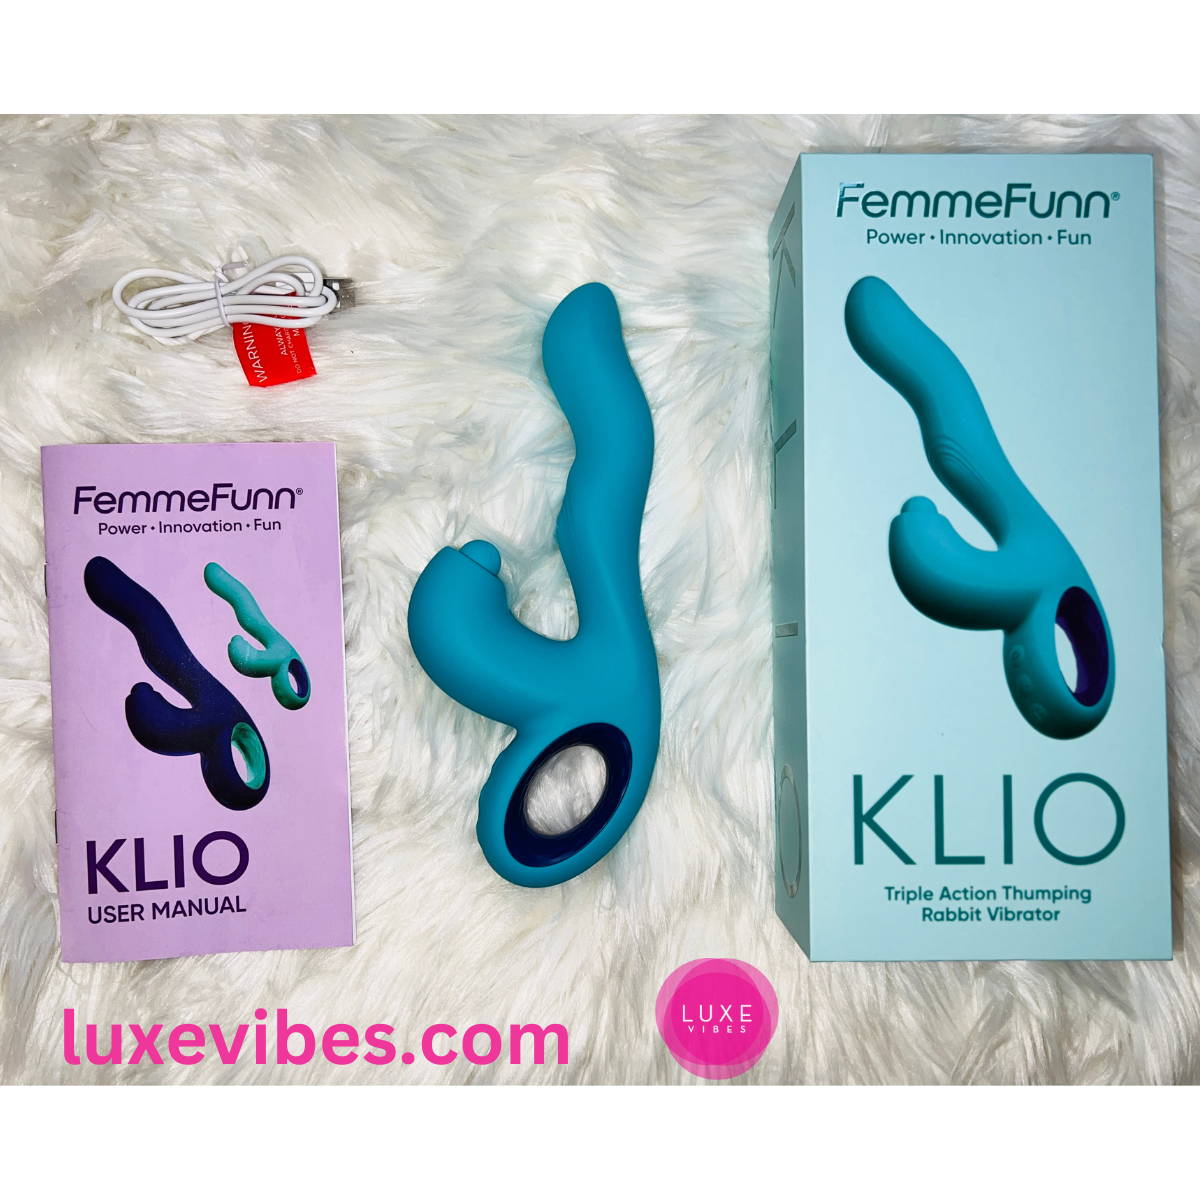 FemmeFunn Klio Box Contents